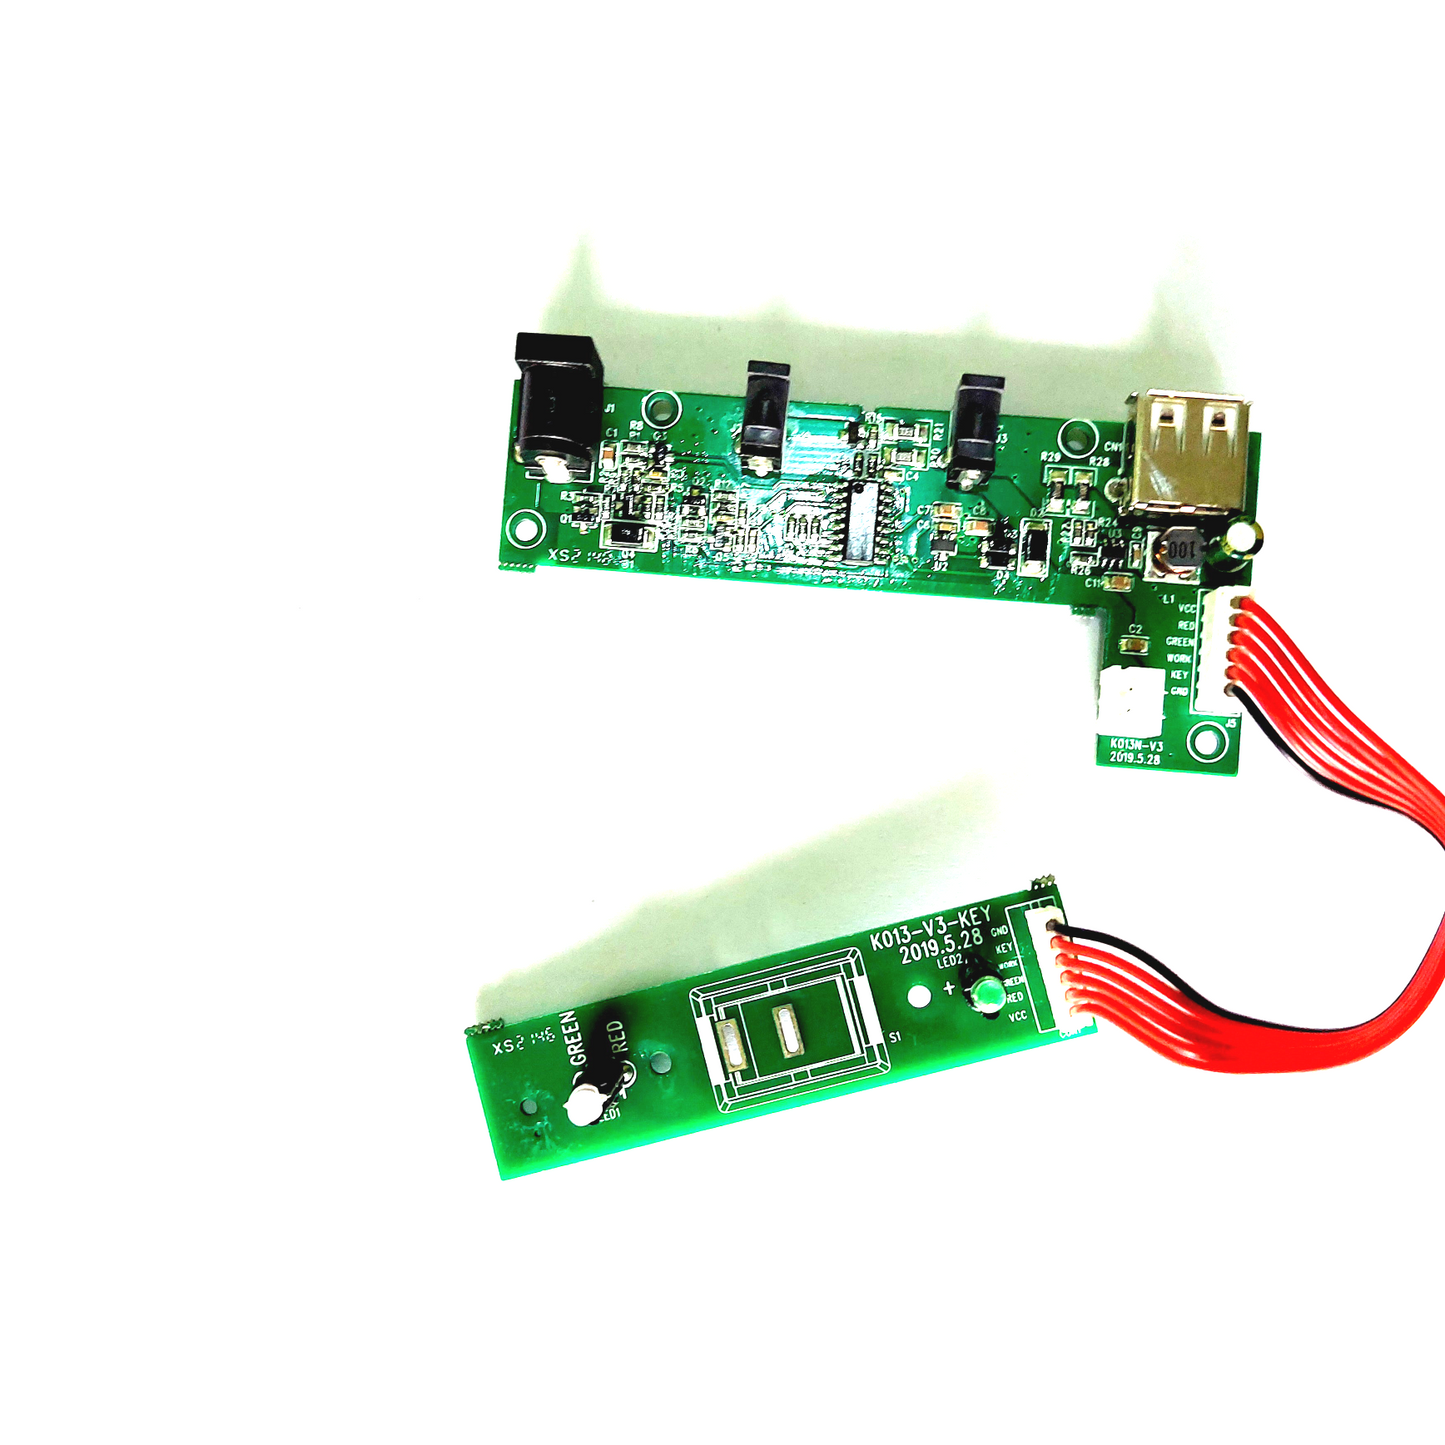 KO13N Solar lighting kit circuit board